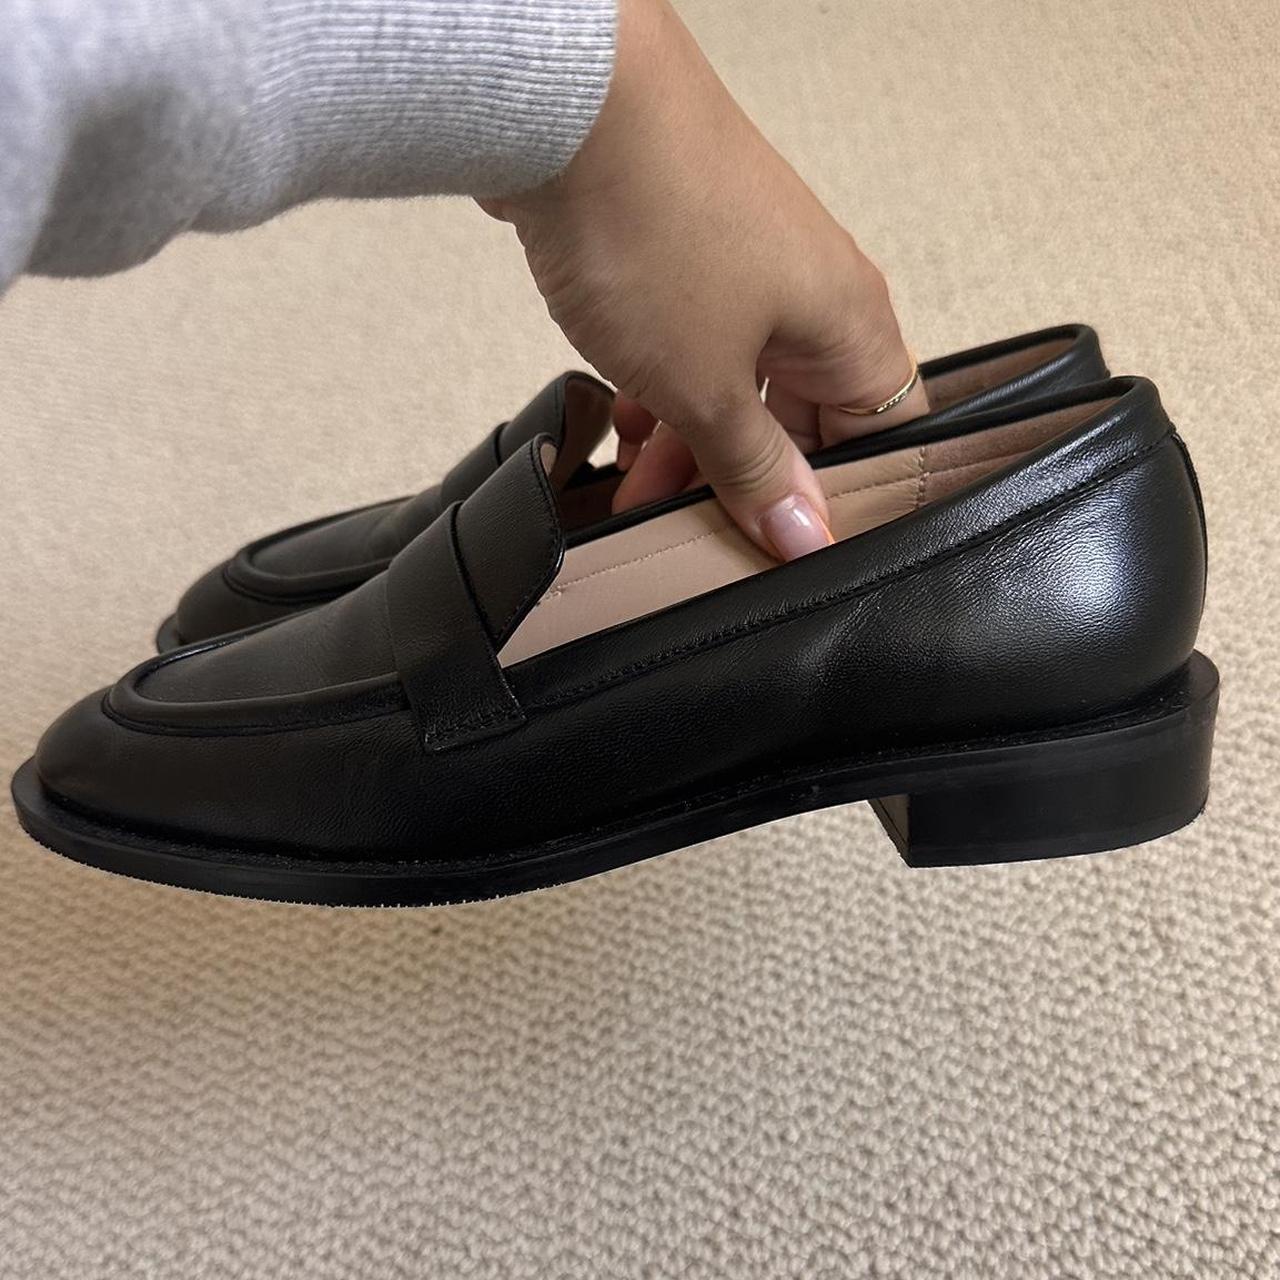 Stuart Weitzman black leather loafers - like new -... - Depop